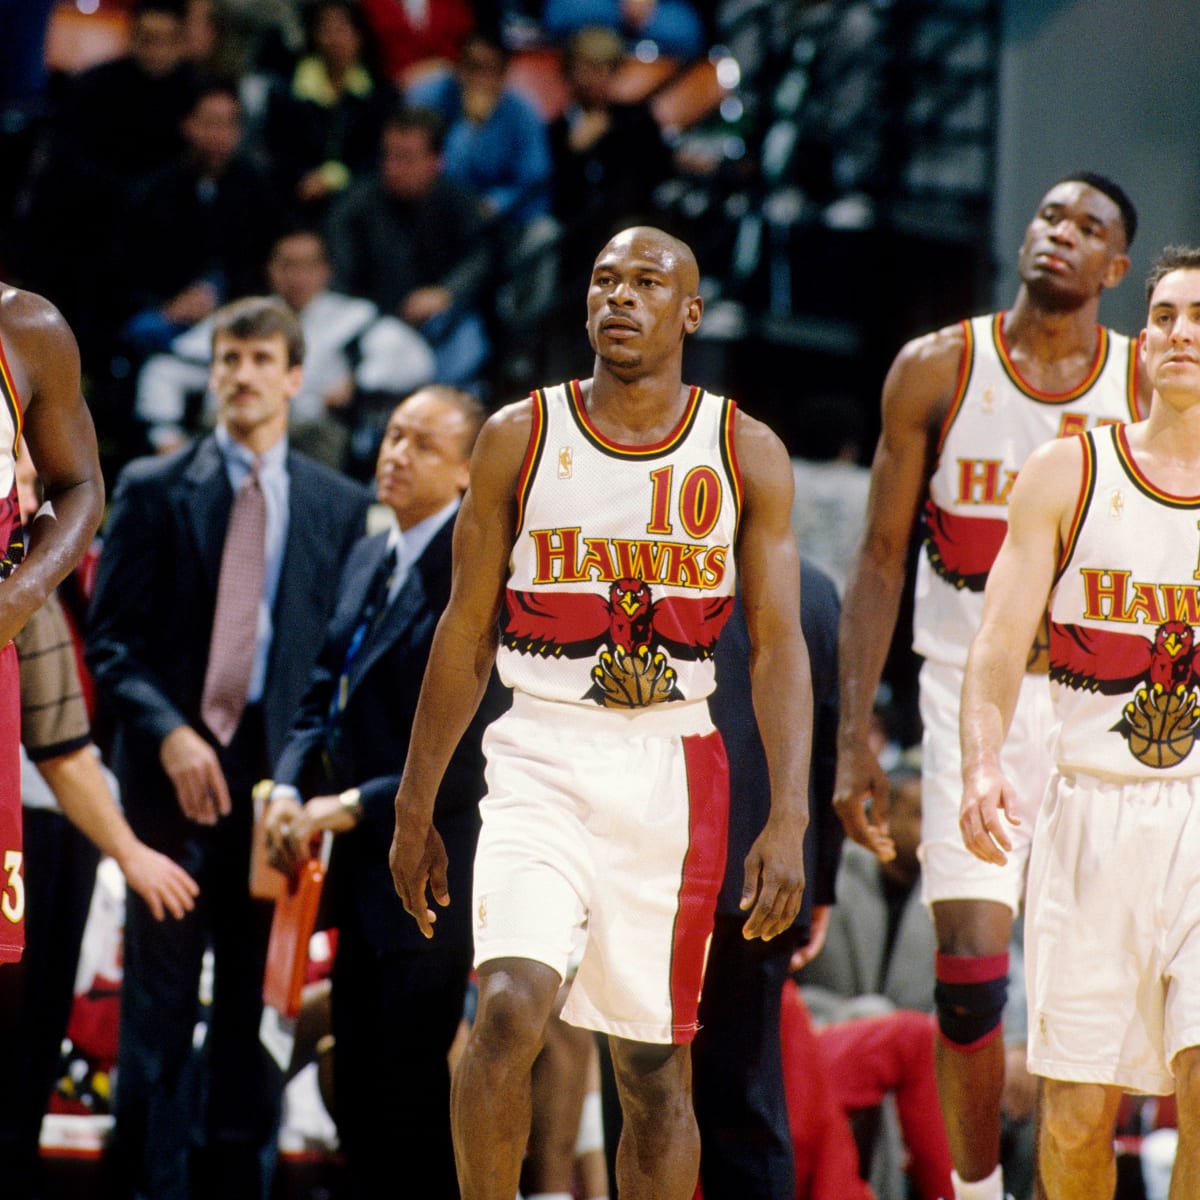 Atlanta Hawks Throwback Jerseys, Vintage NBA Gear